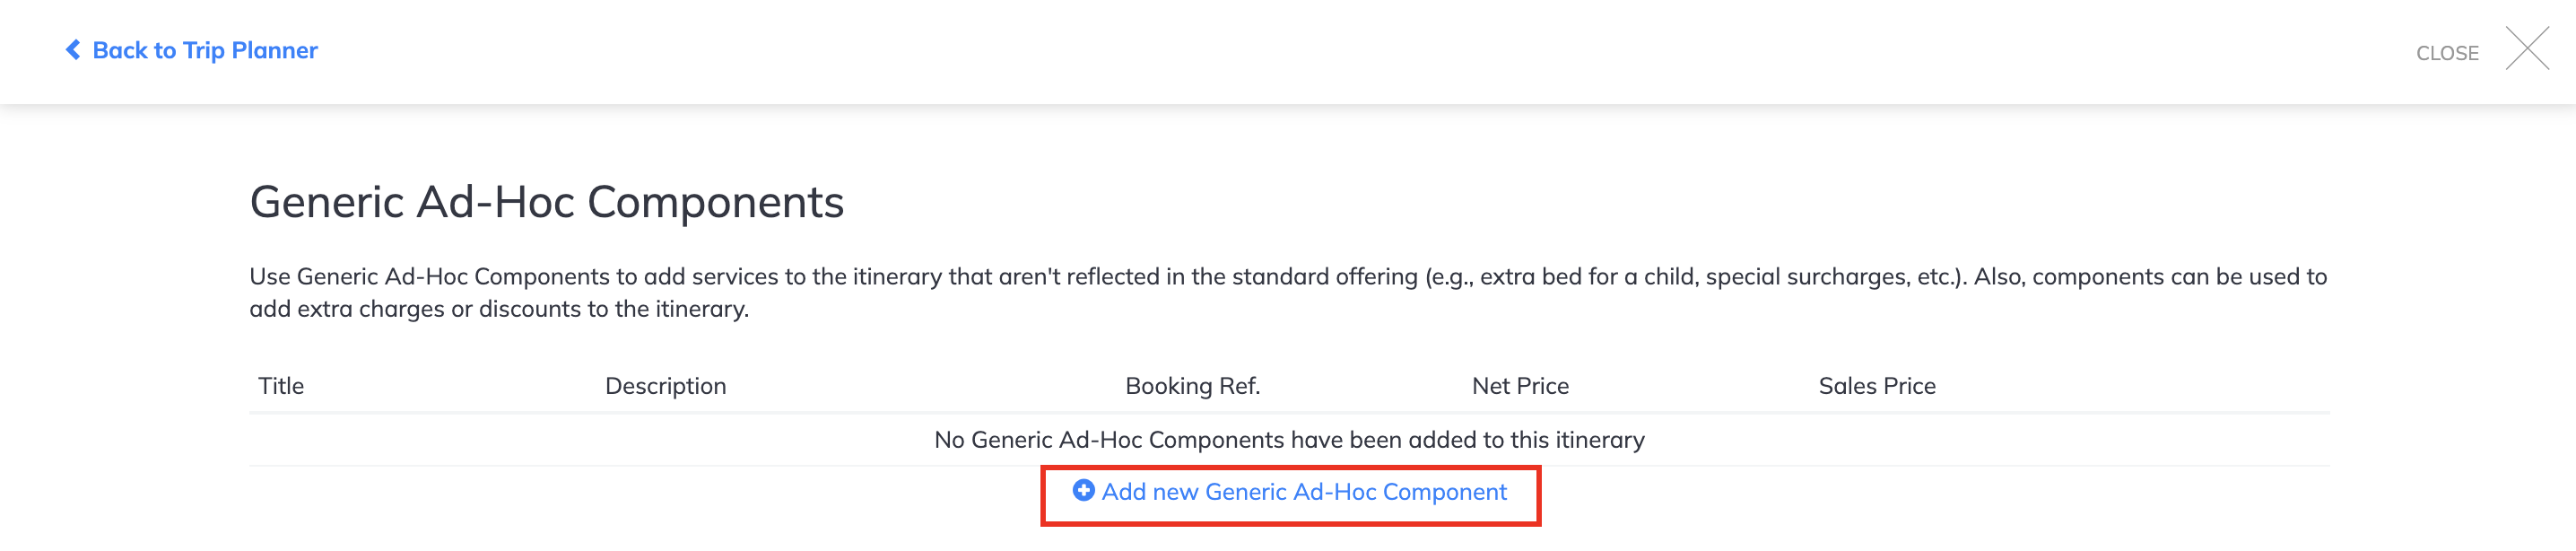 Add_new_generic_ad-hoc_component.png